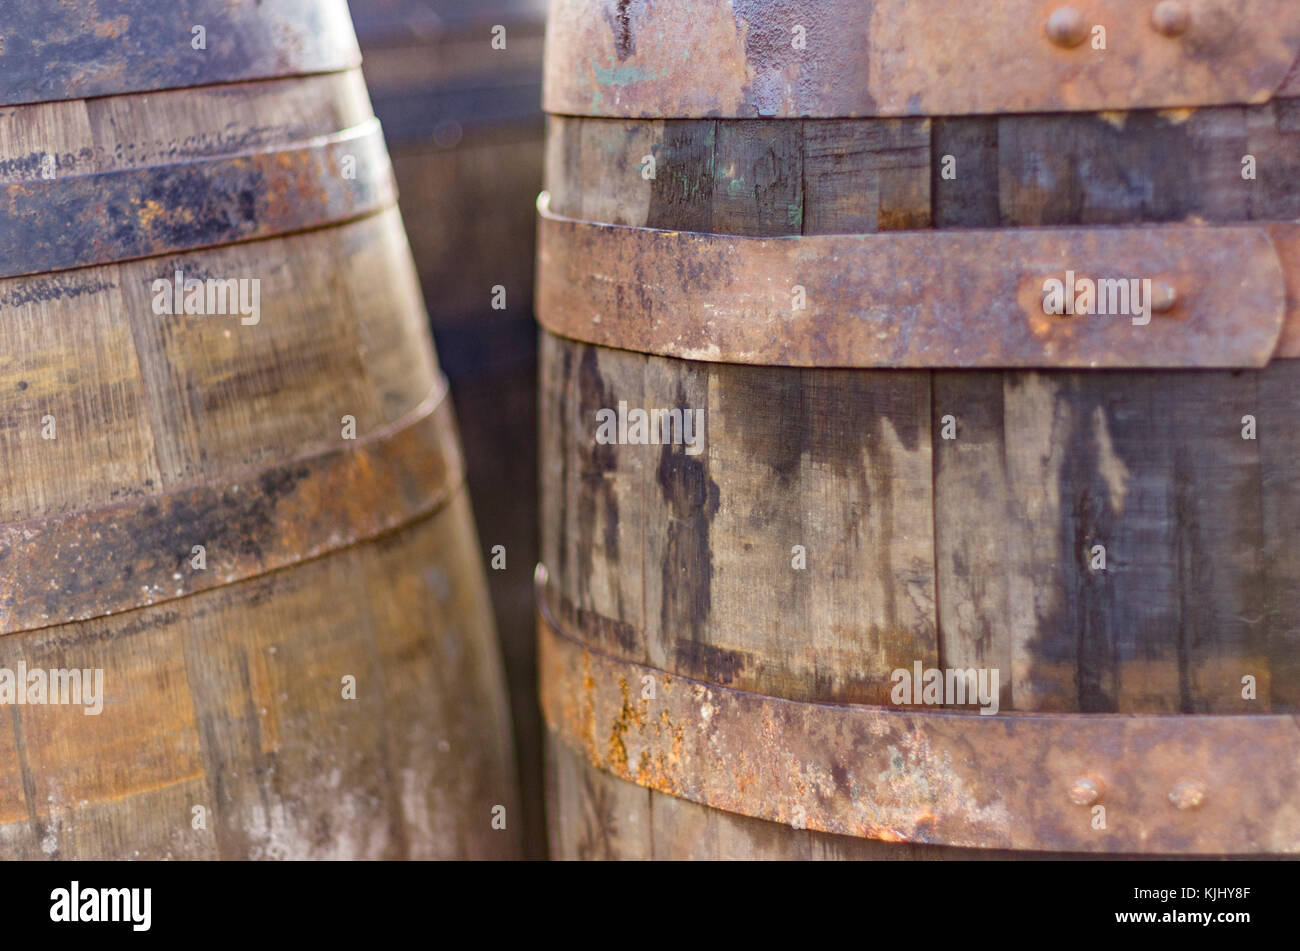 En barriles de Whisky Glenfiddich Distillery, Dufftown, Speyside, Escocia, Reino Unido Foto de stock